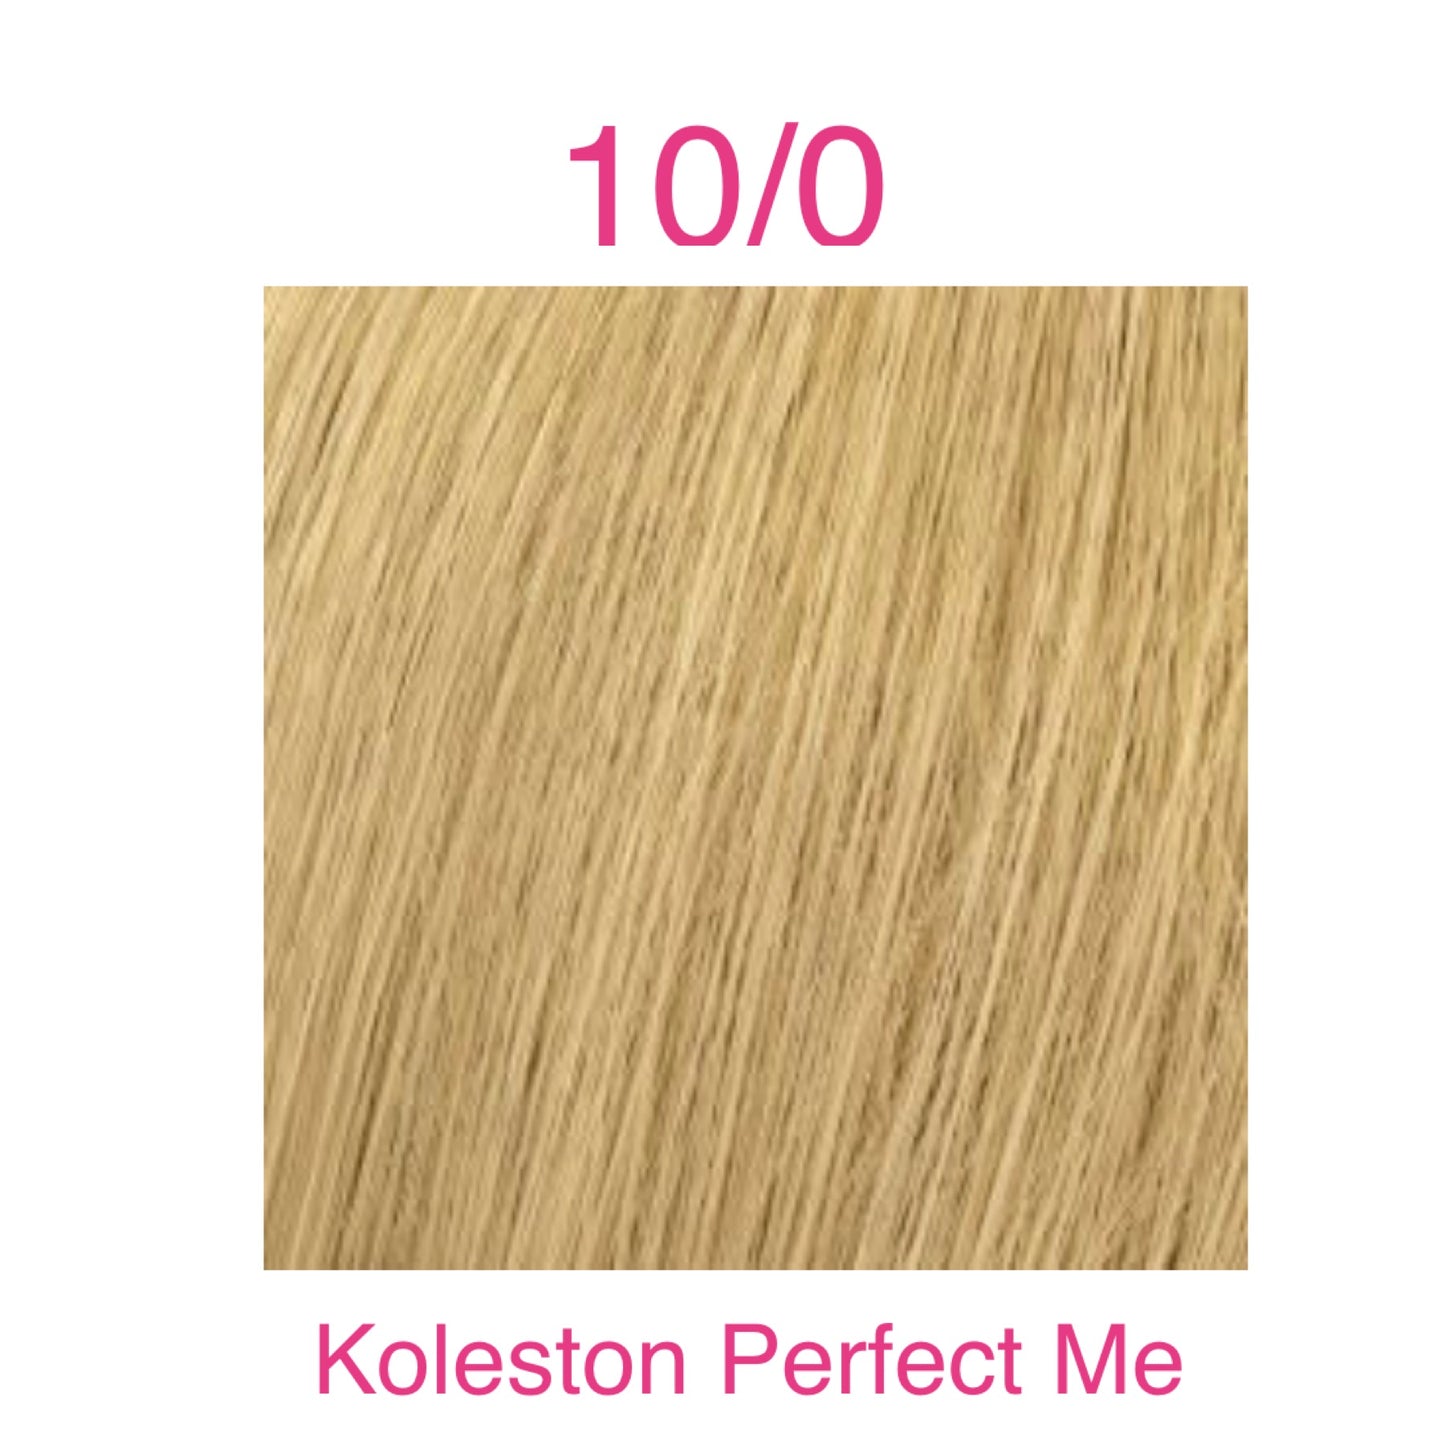 Wella Koleston Perfect Me+ Base/Double Base/Intense/Special Mix Colours 60ml tube